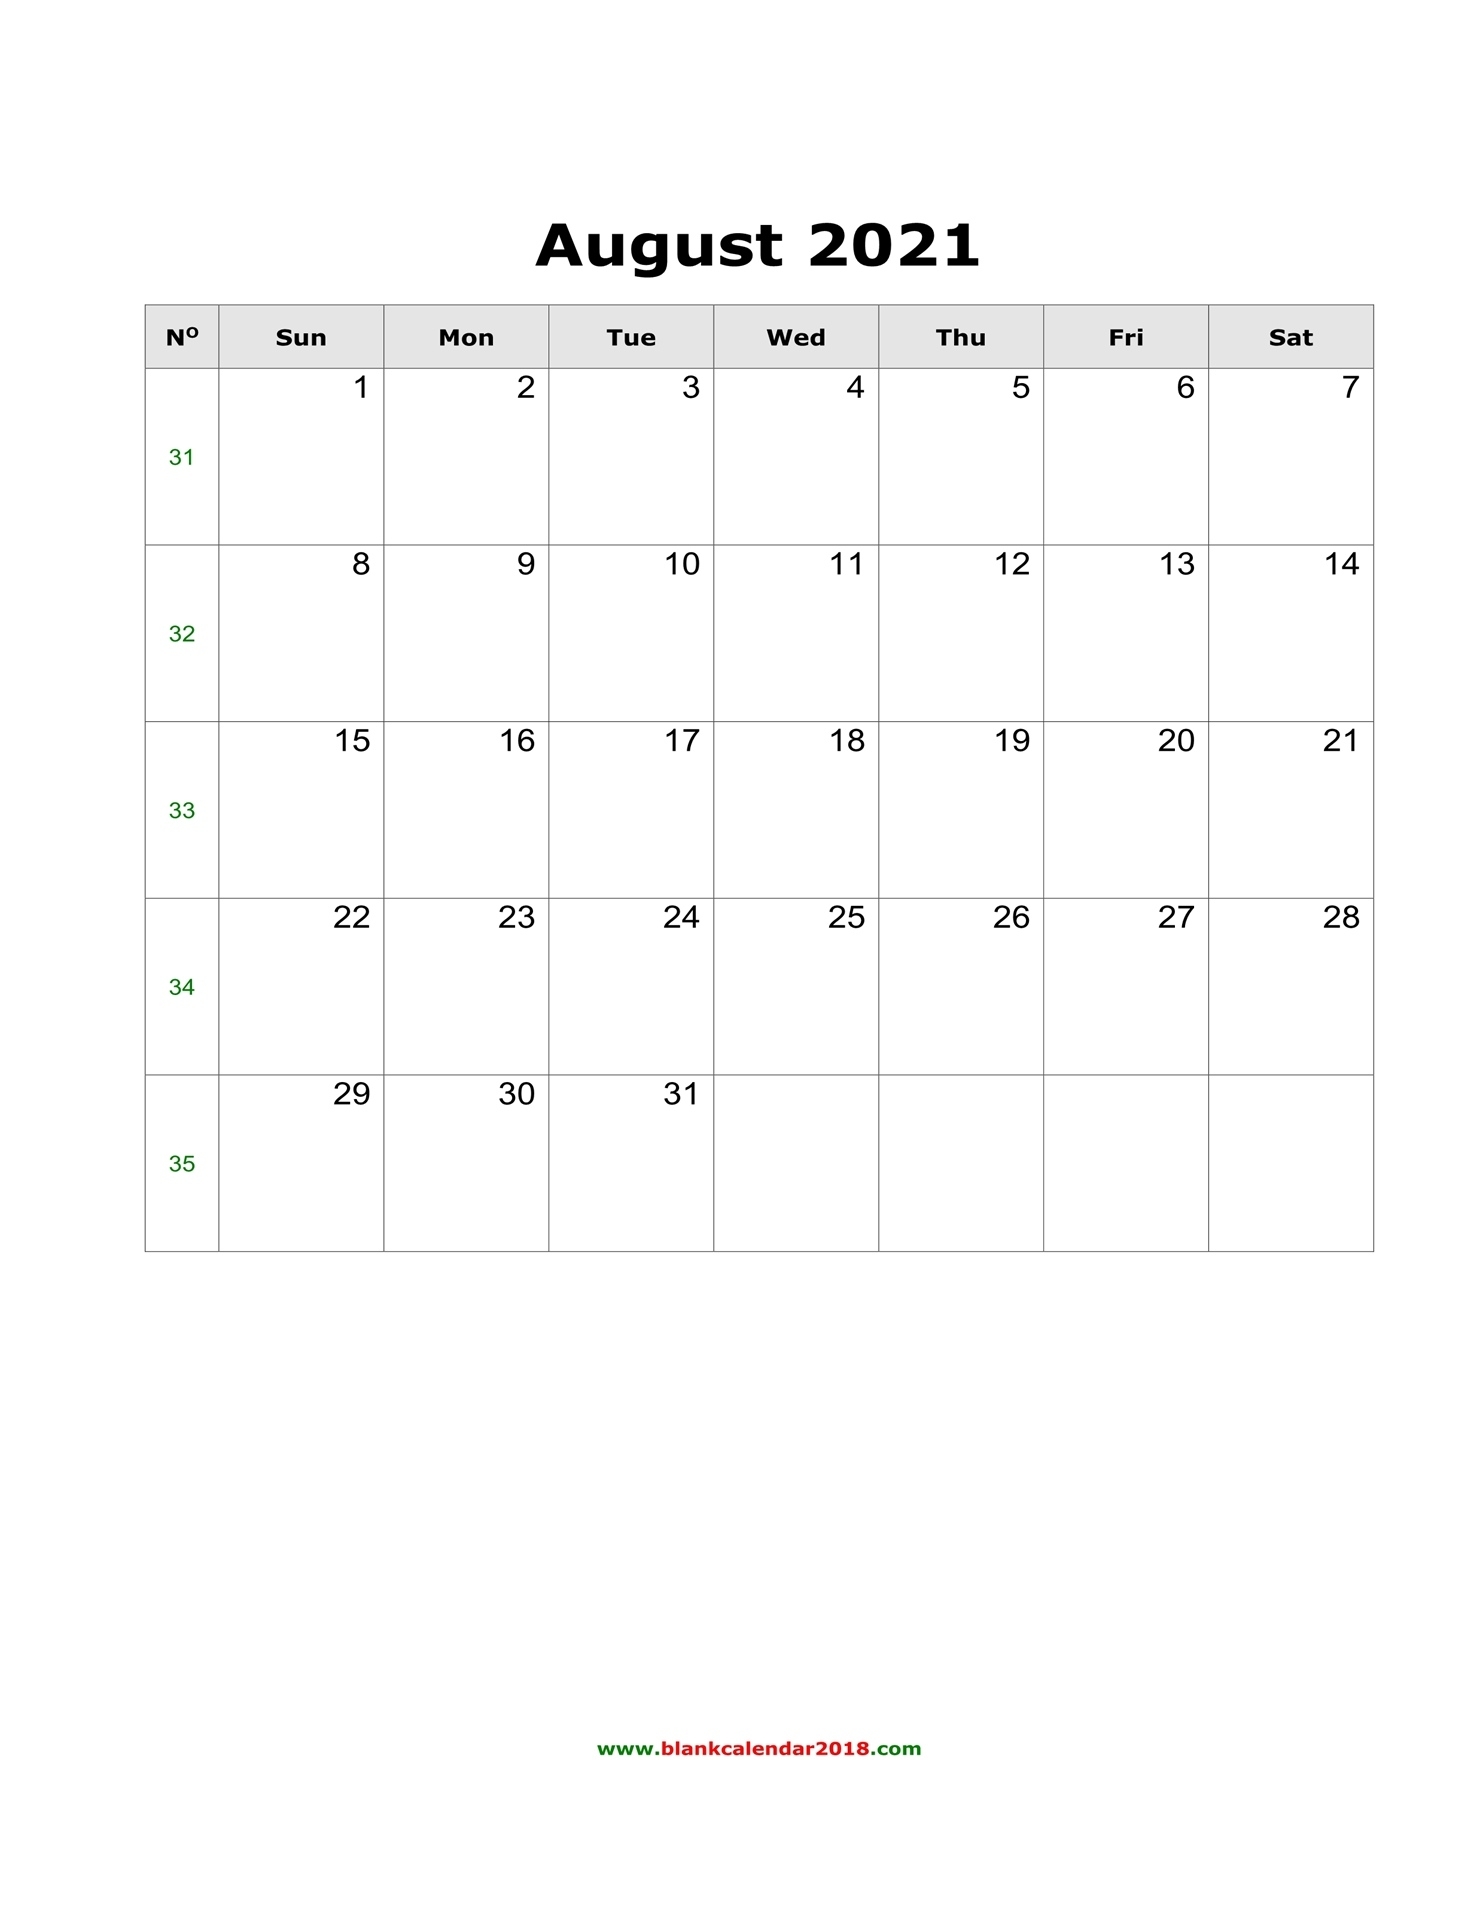 Blank Calendar For August 2021 Blank Calendar Pages August 2021